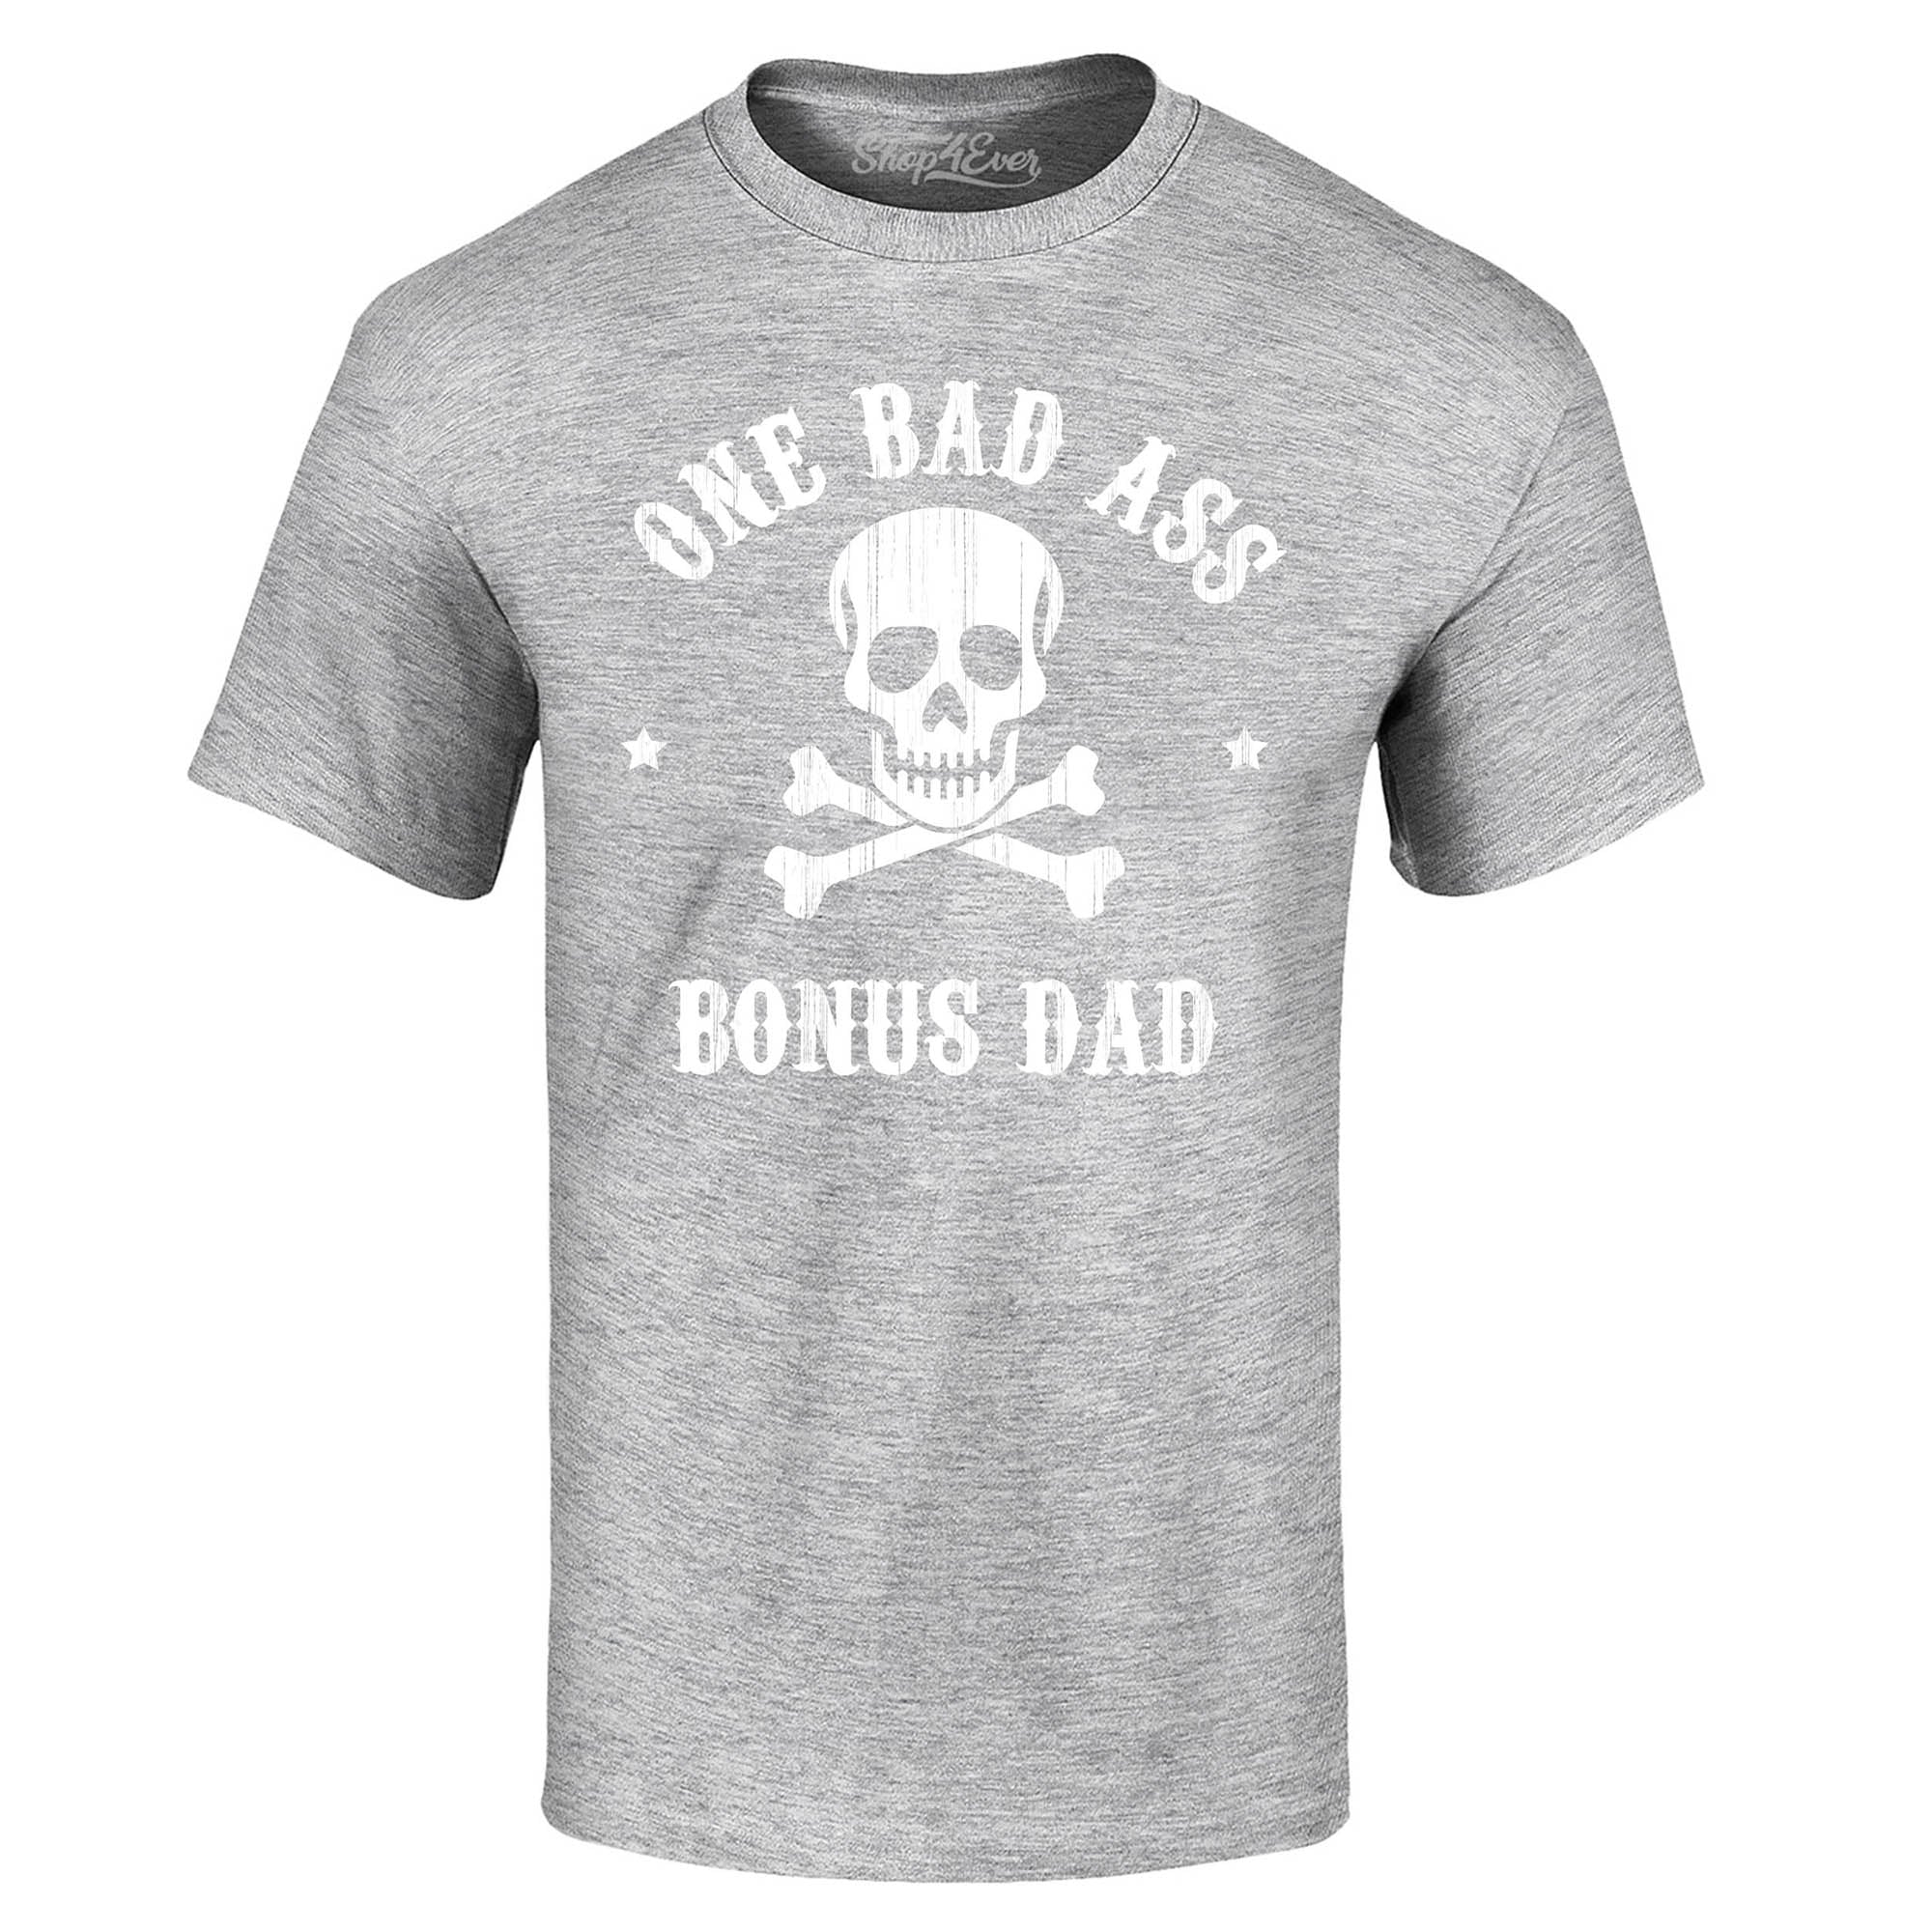 One Bad Ass Bonus Dad T-Shirt